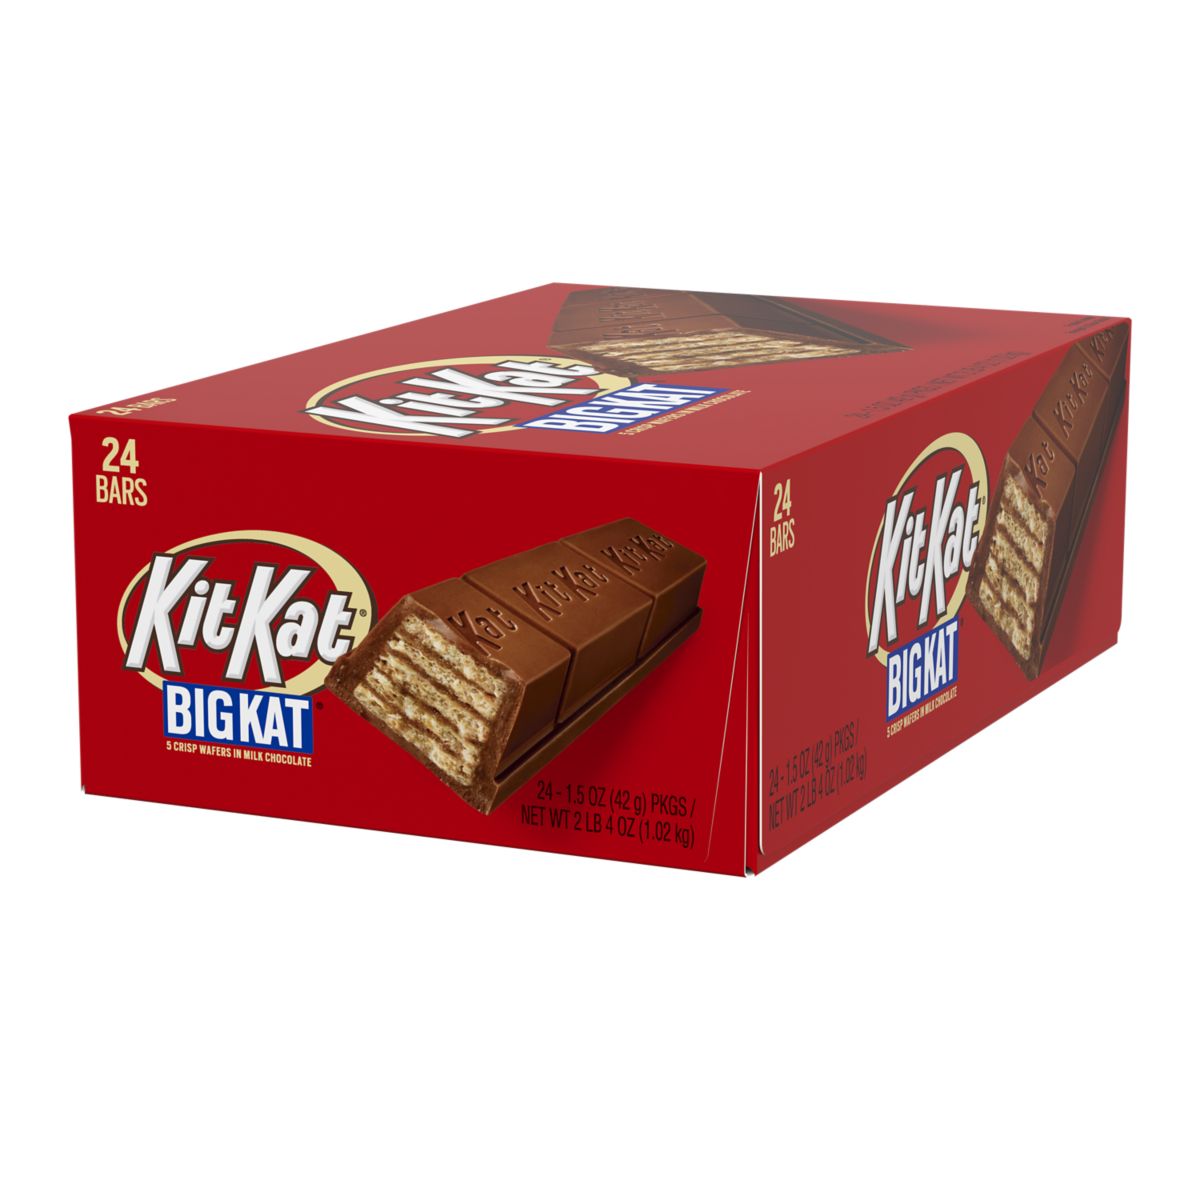 Kit Kat Milk Chocolate USA 42g